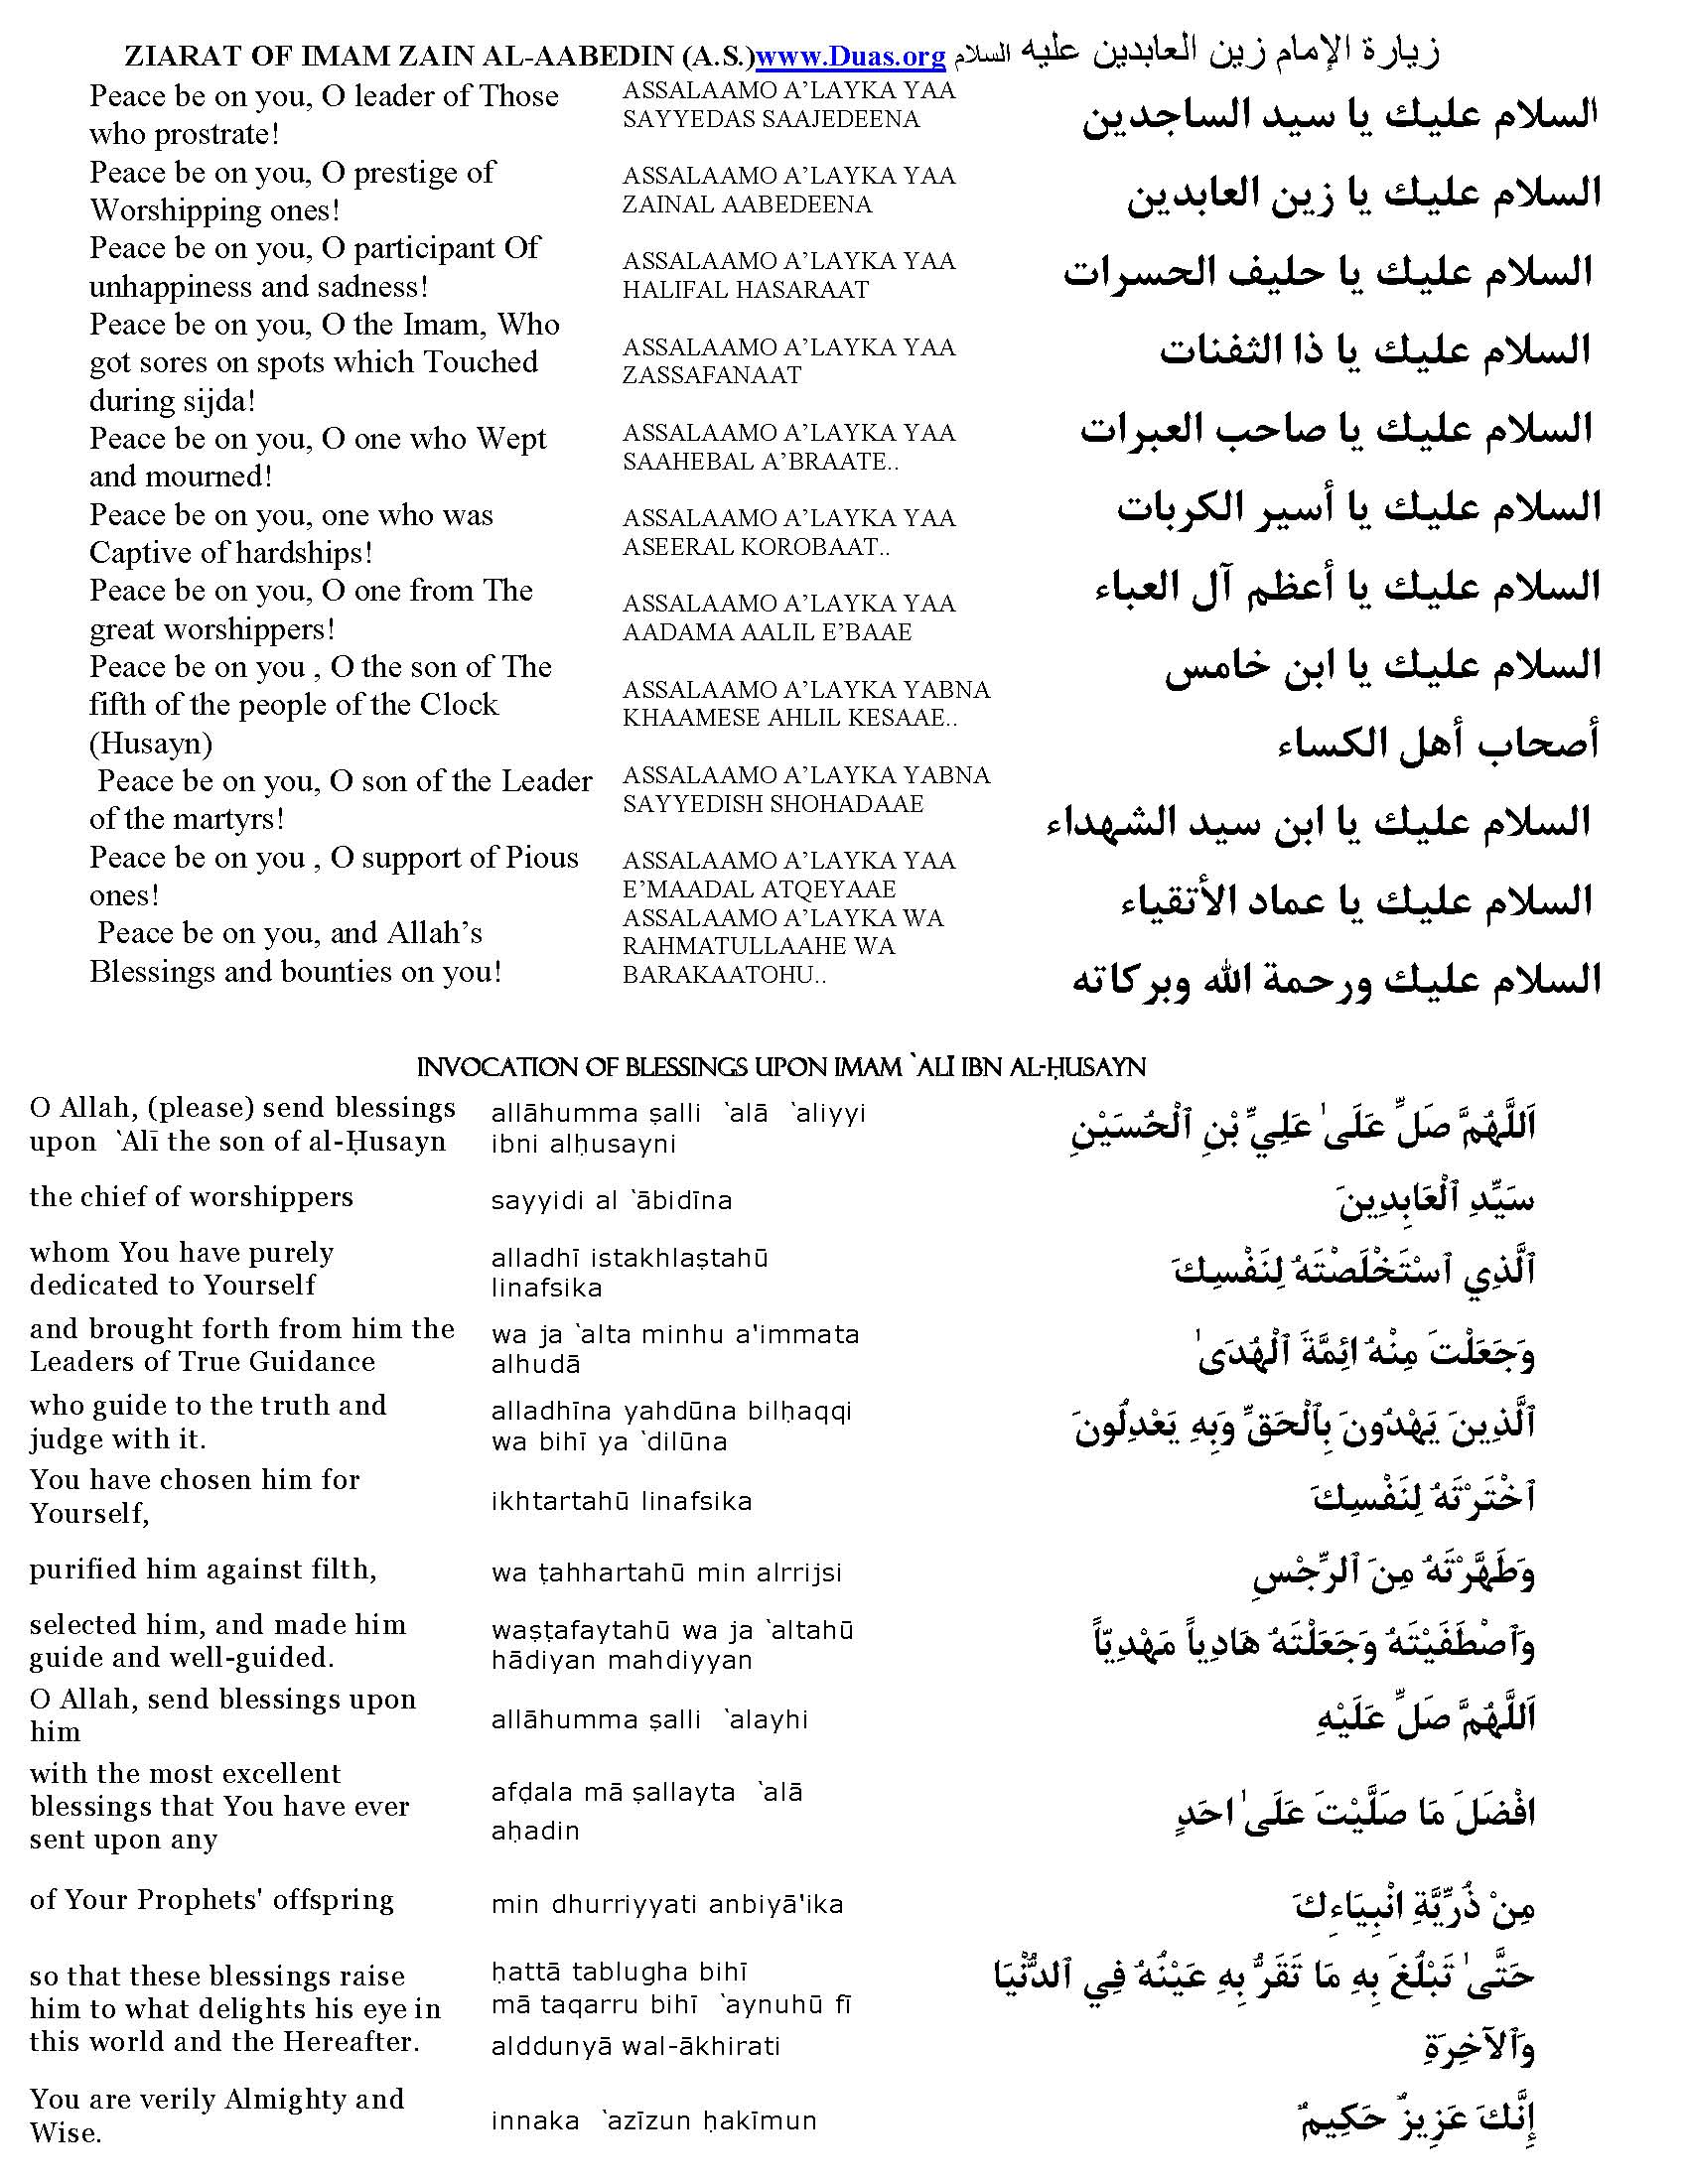 Ziyarat Nahiya Urdu.pdf